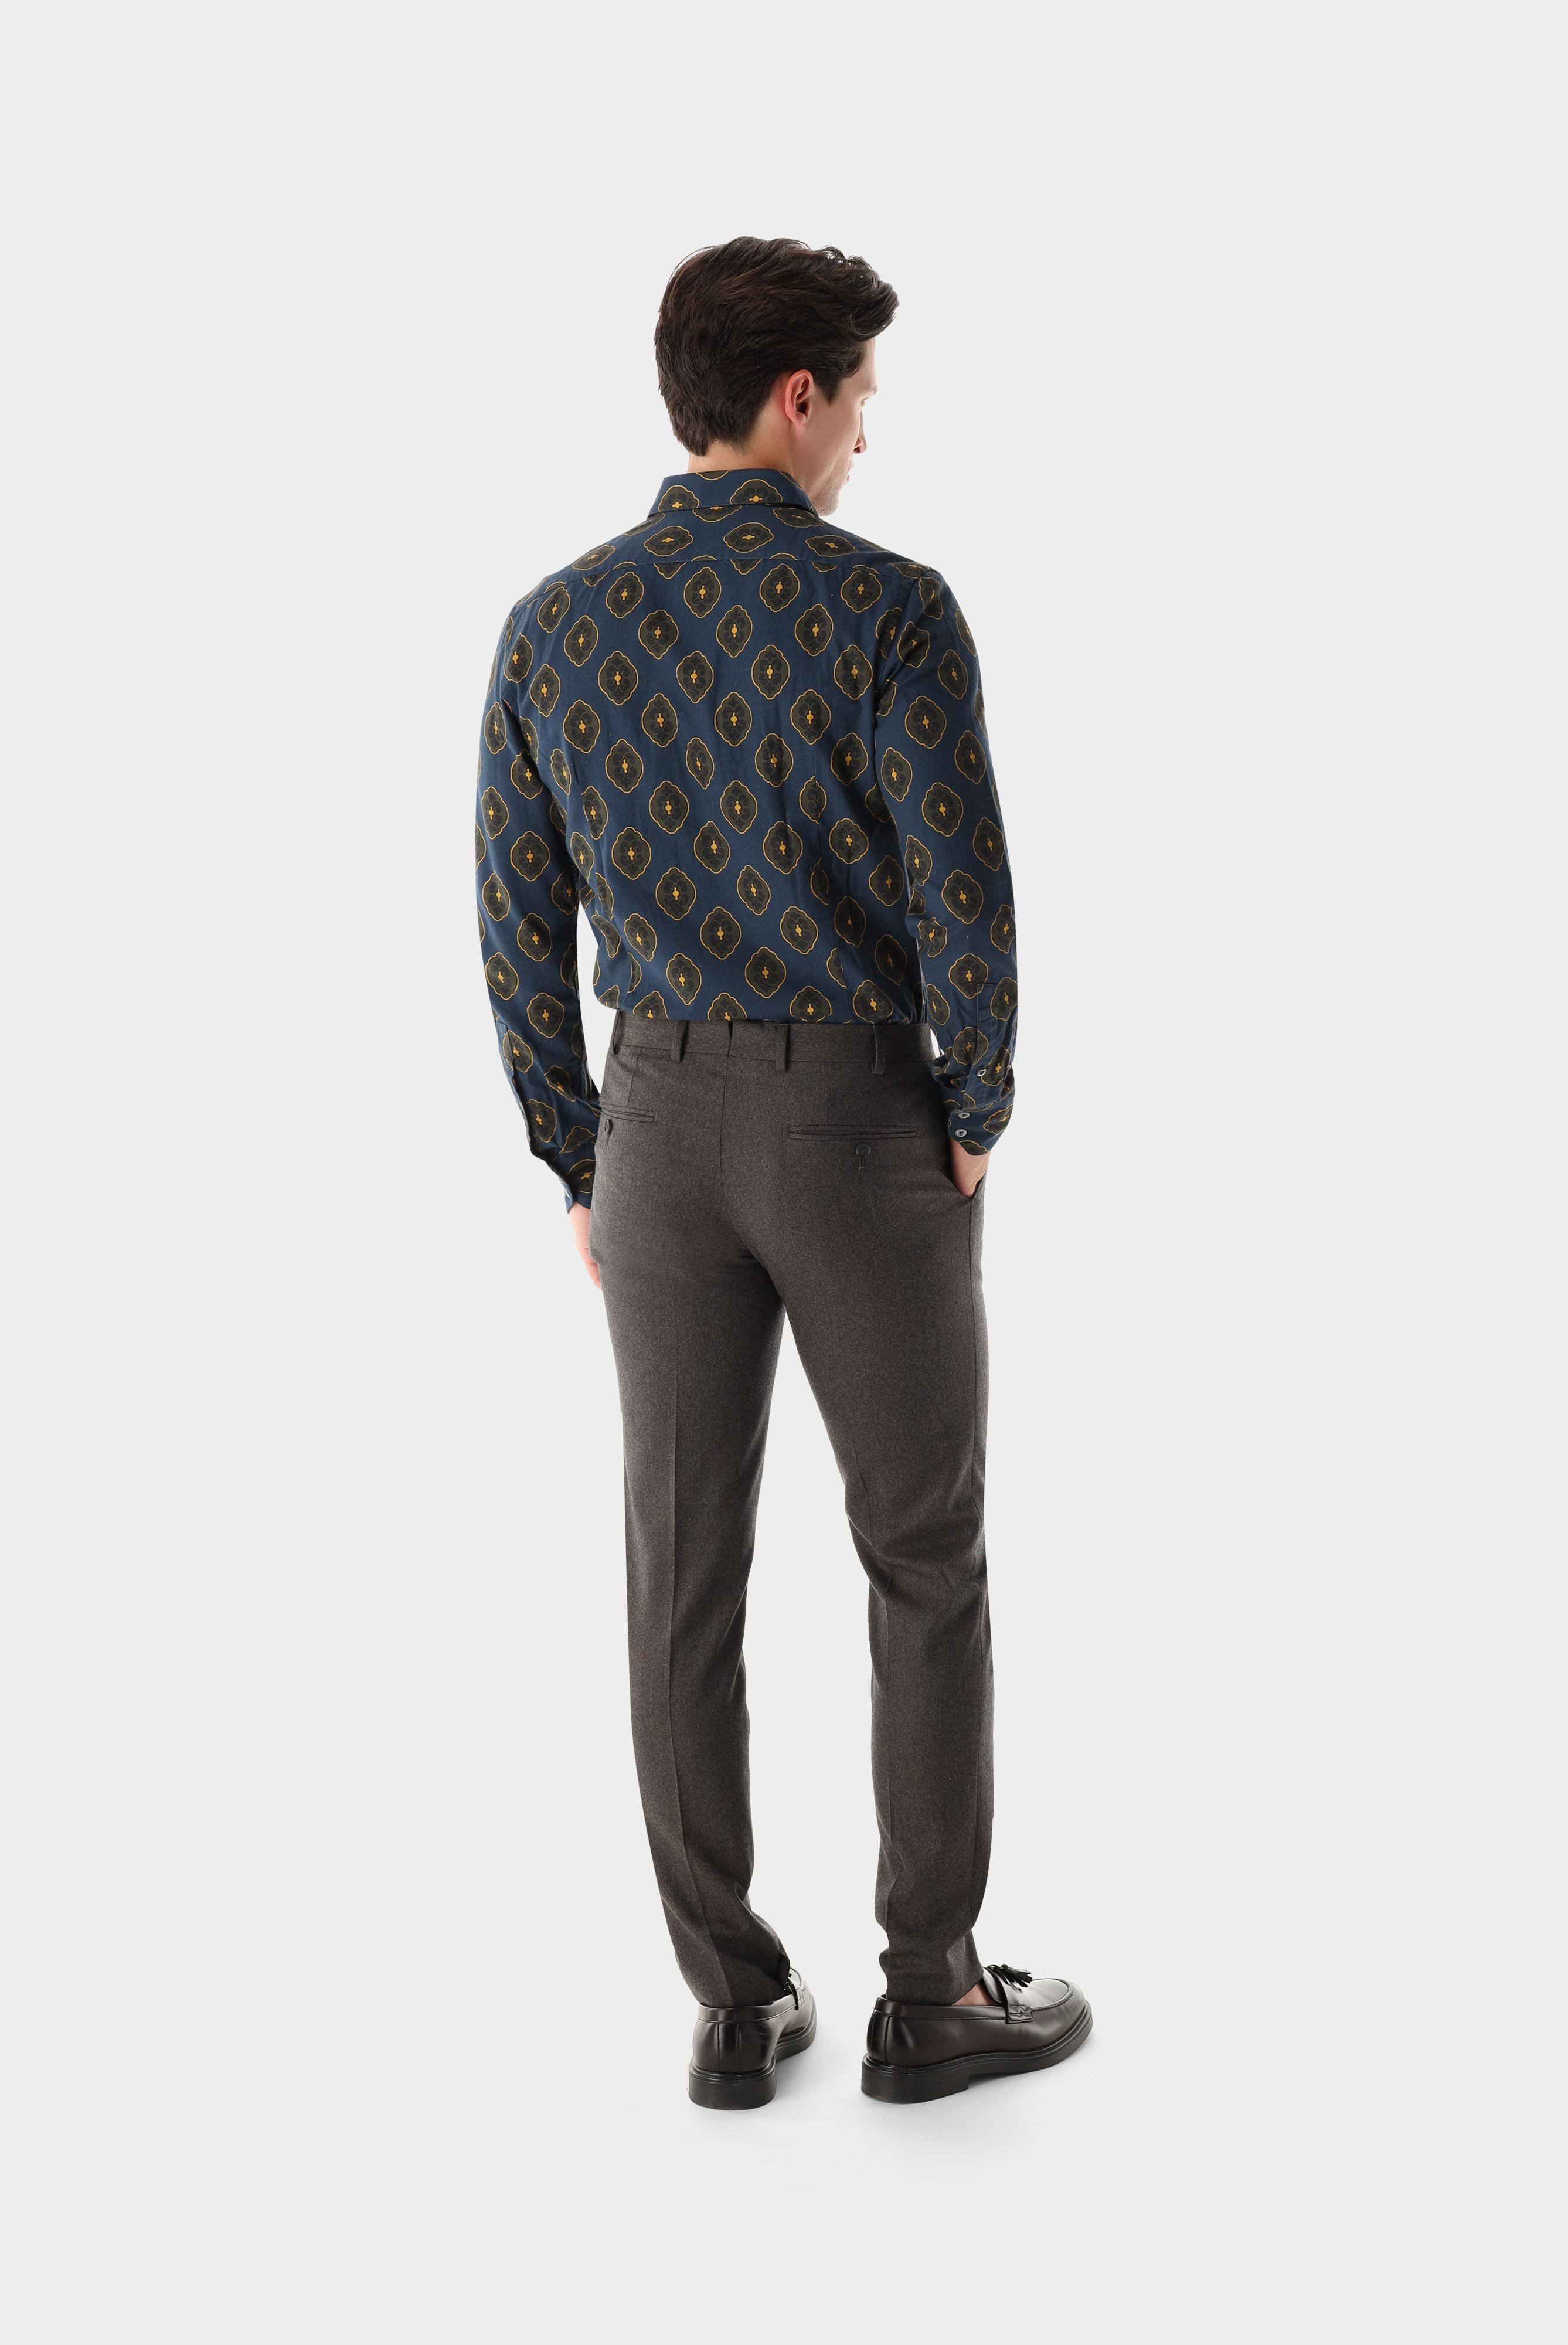 Casual Hemden+Vintage Twill Hemd Tailor Fit+20.2086.MB.172031.789.42